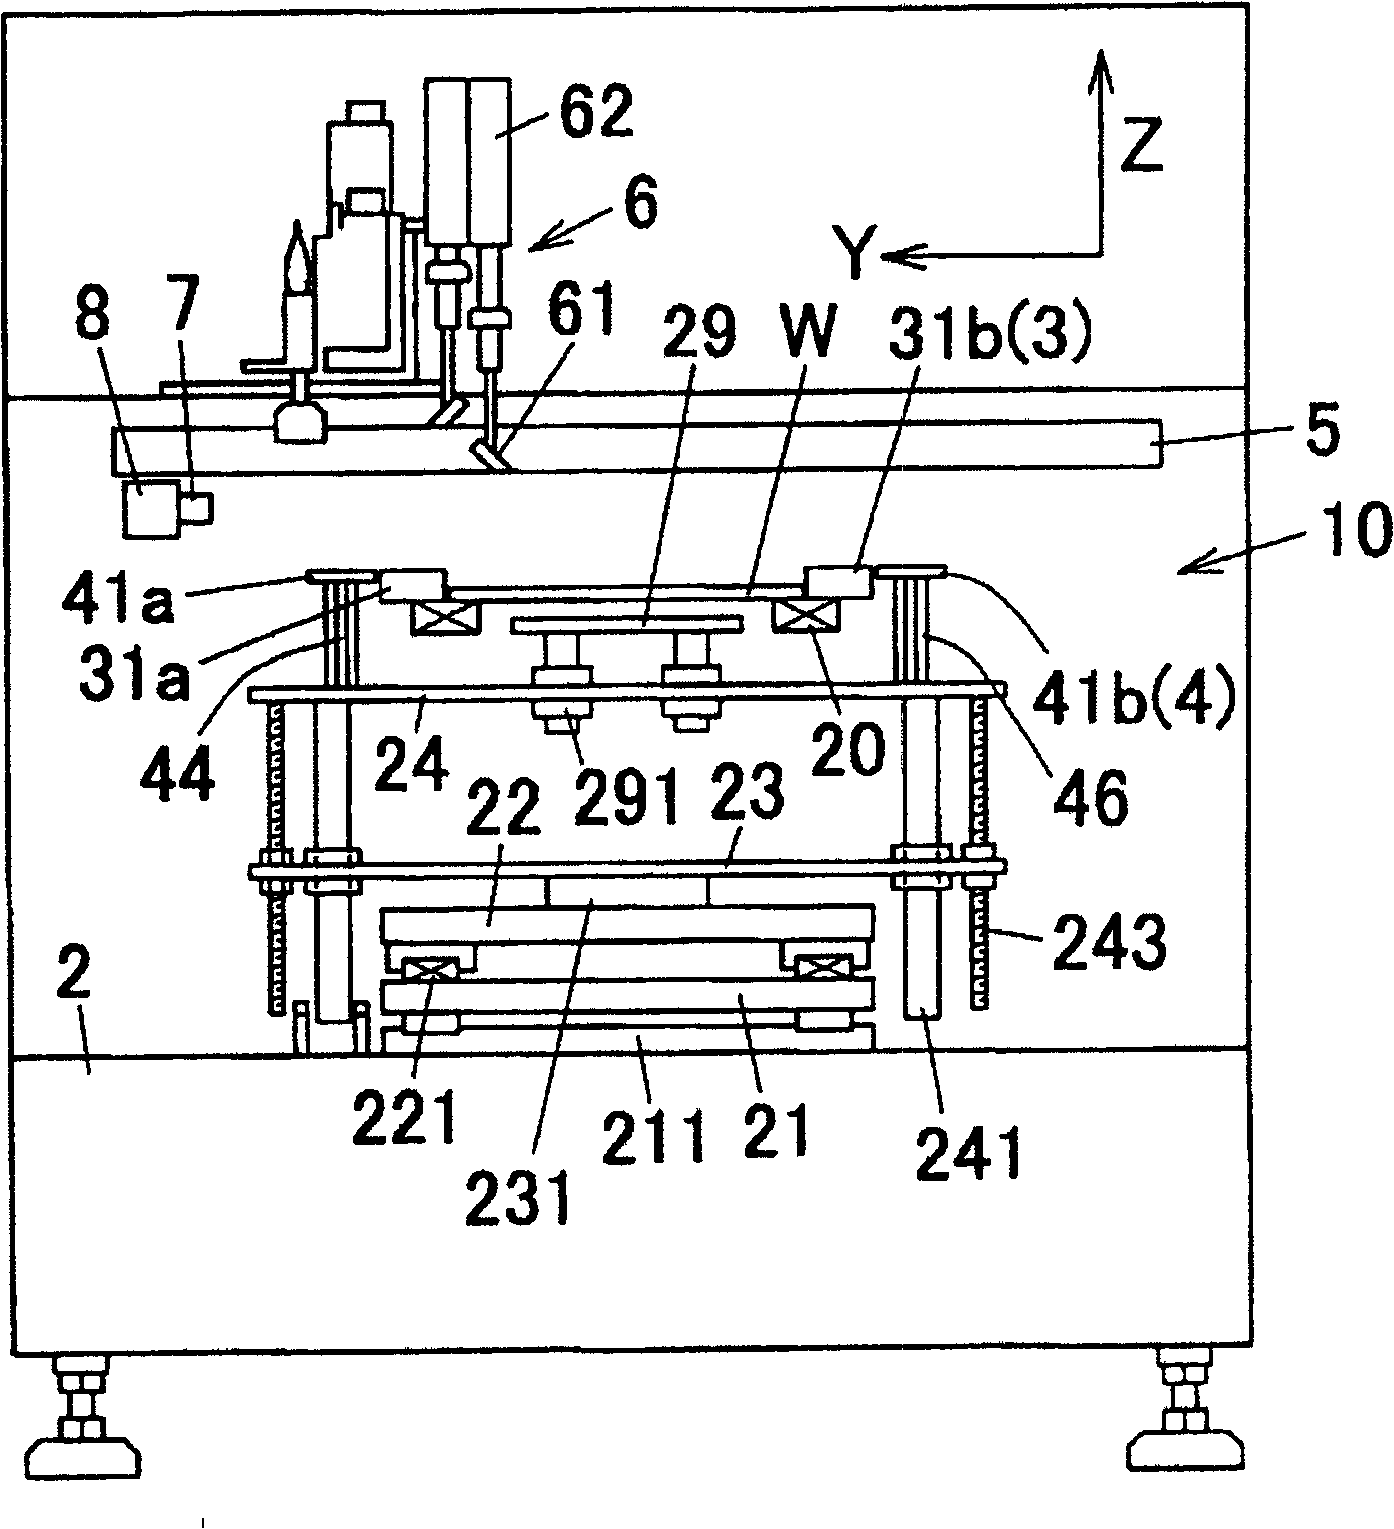 Screen printing device